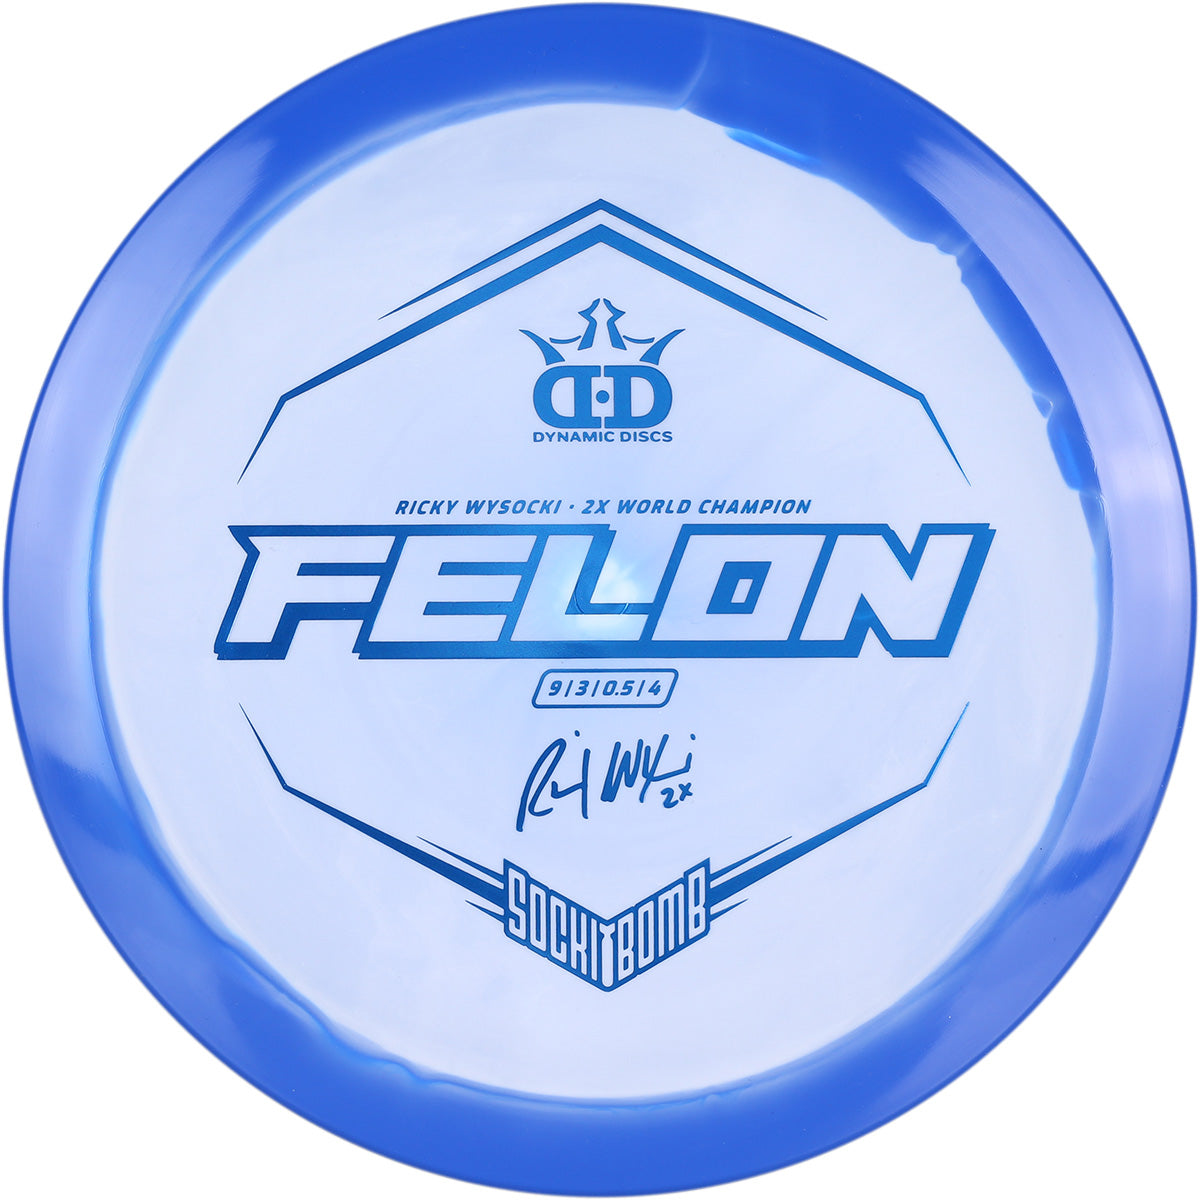 Dynamic Discs Felon - Fuzion Orbit Sockibomb Stamp